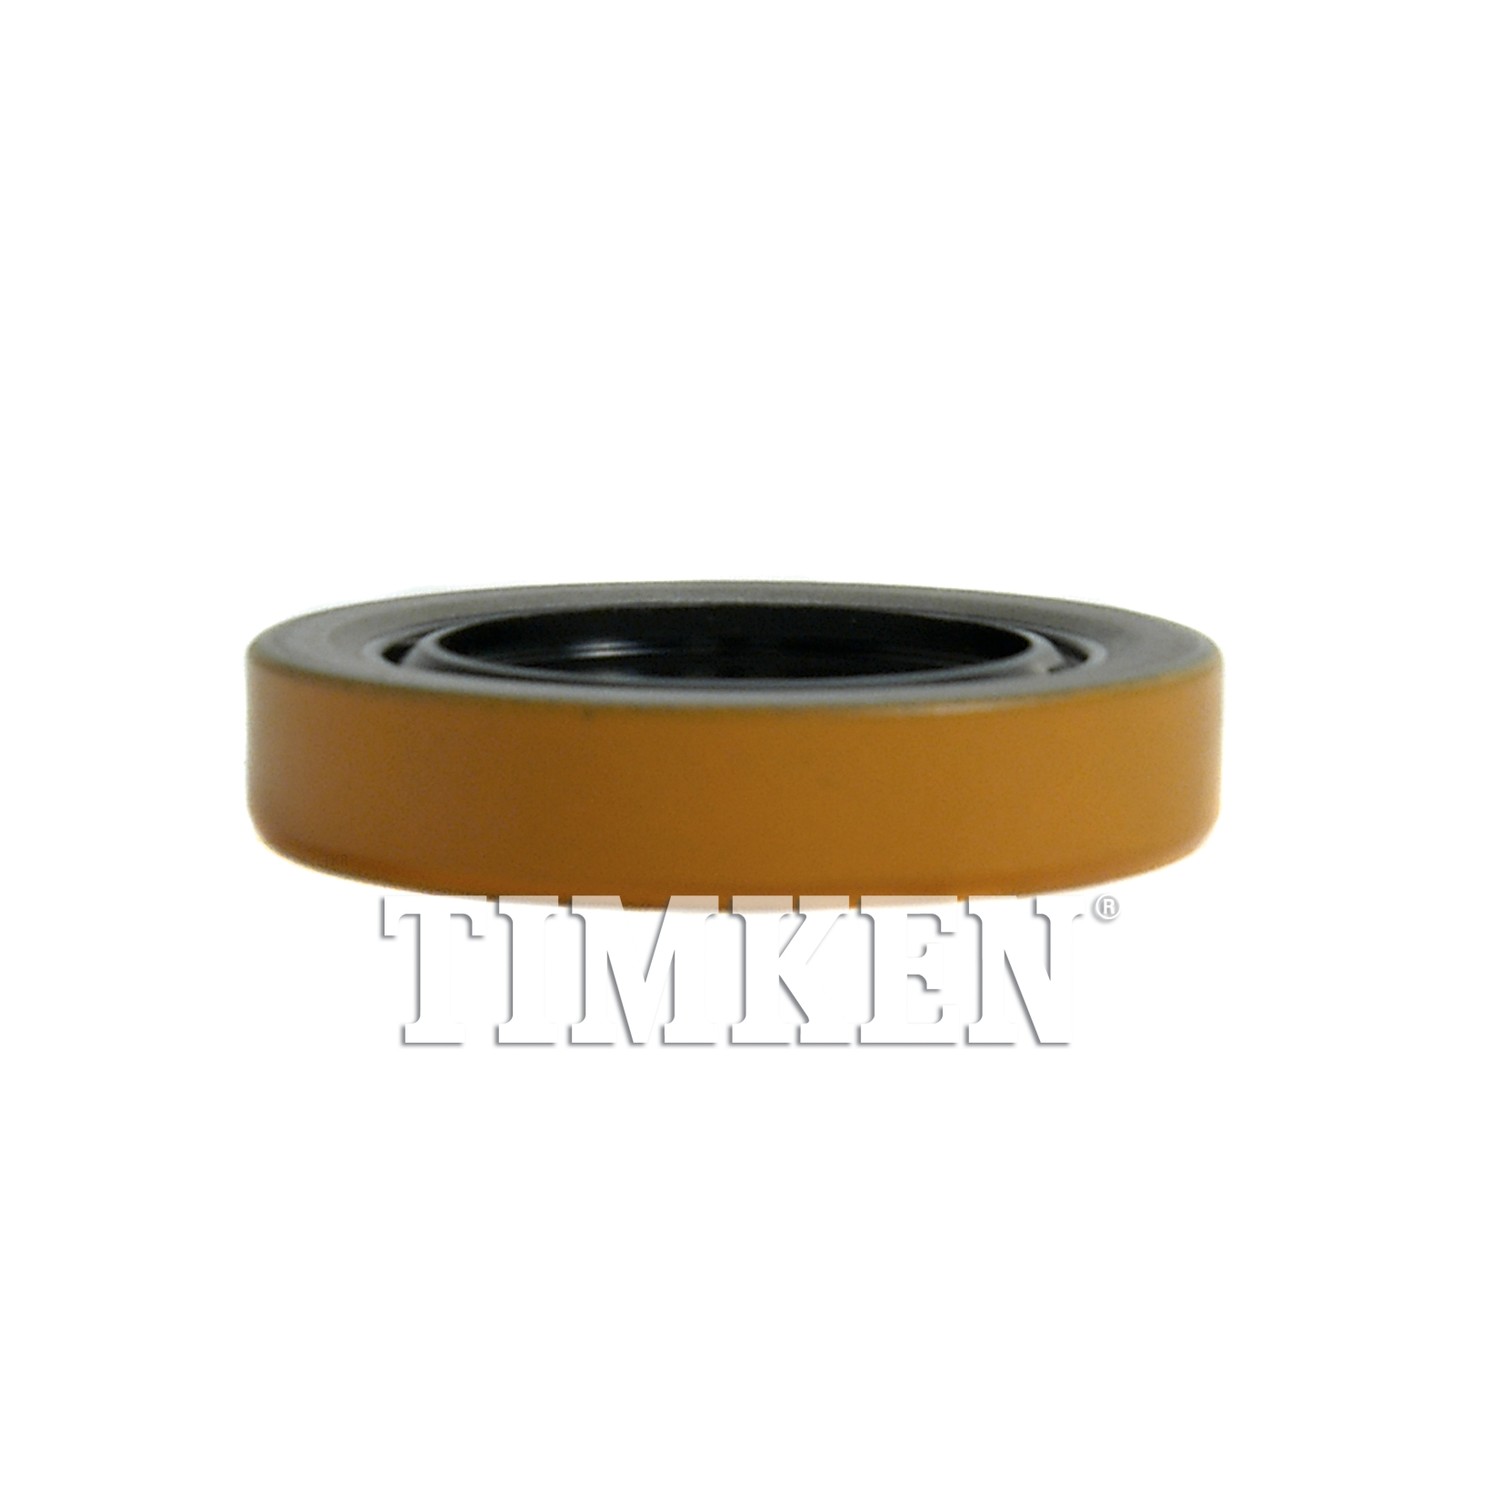 TIMKEN - Axle Shaft Seal (Rear) - TIM 8660S